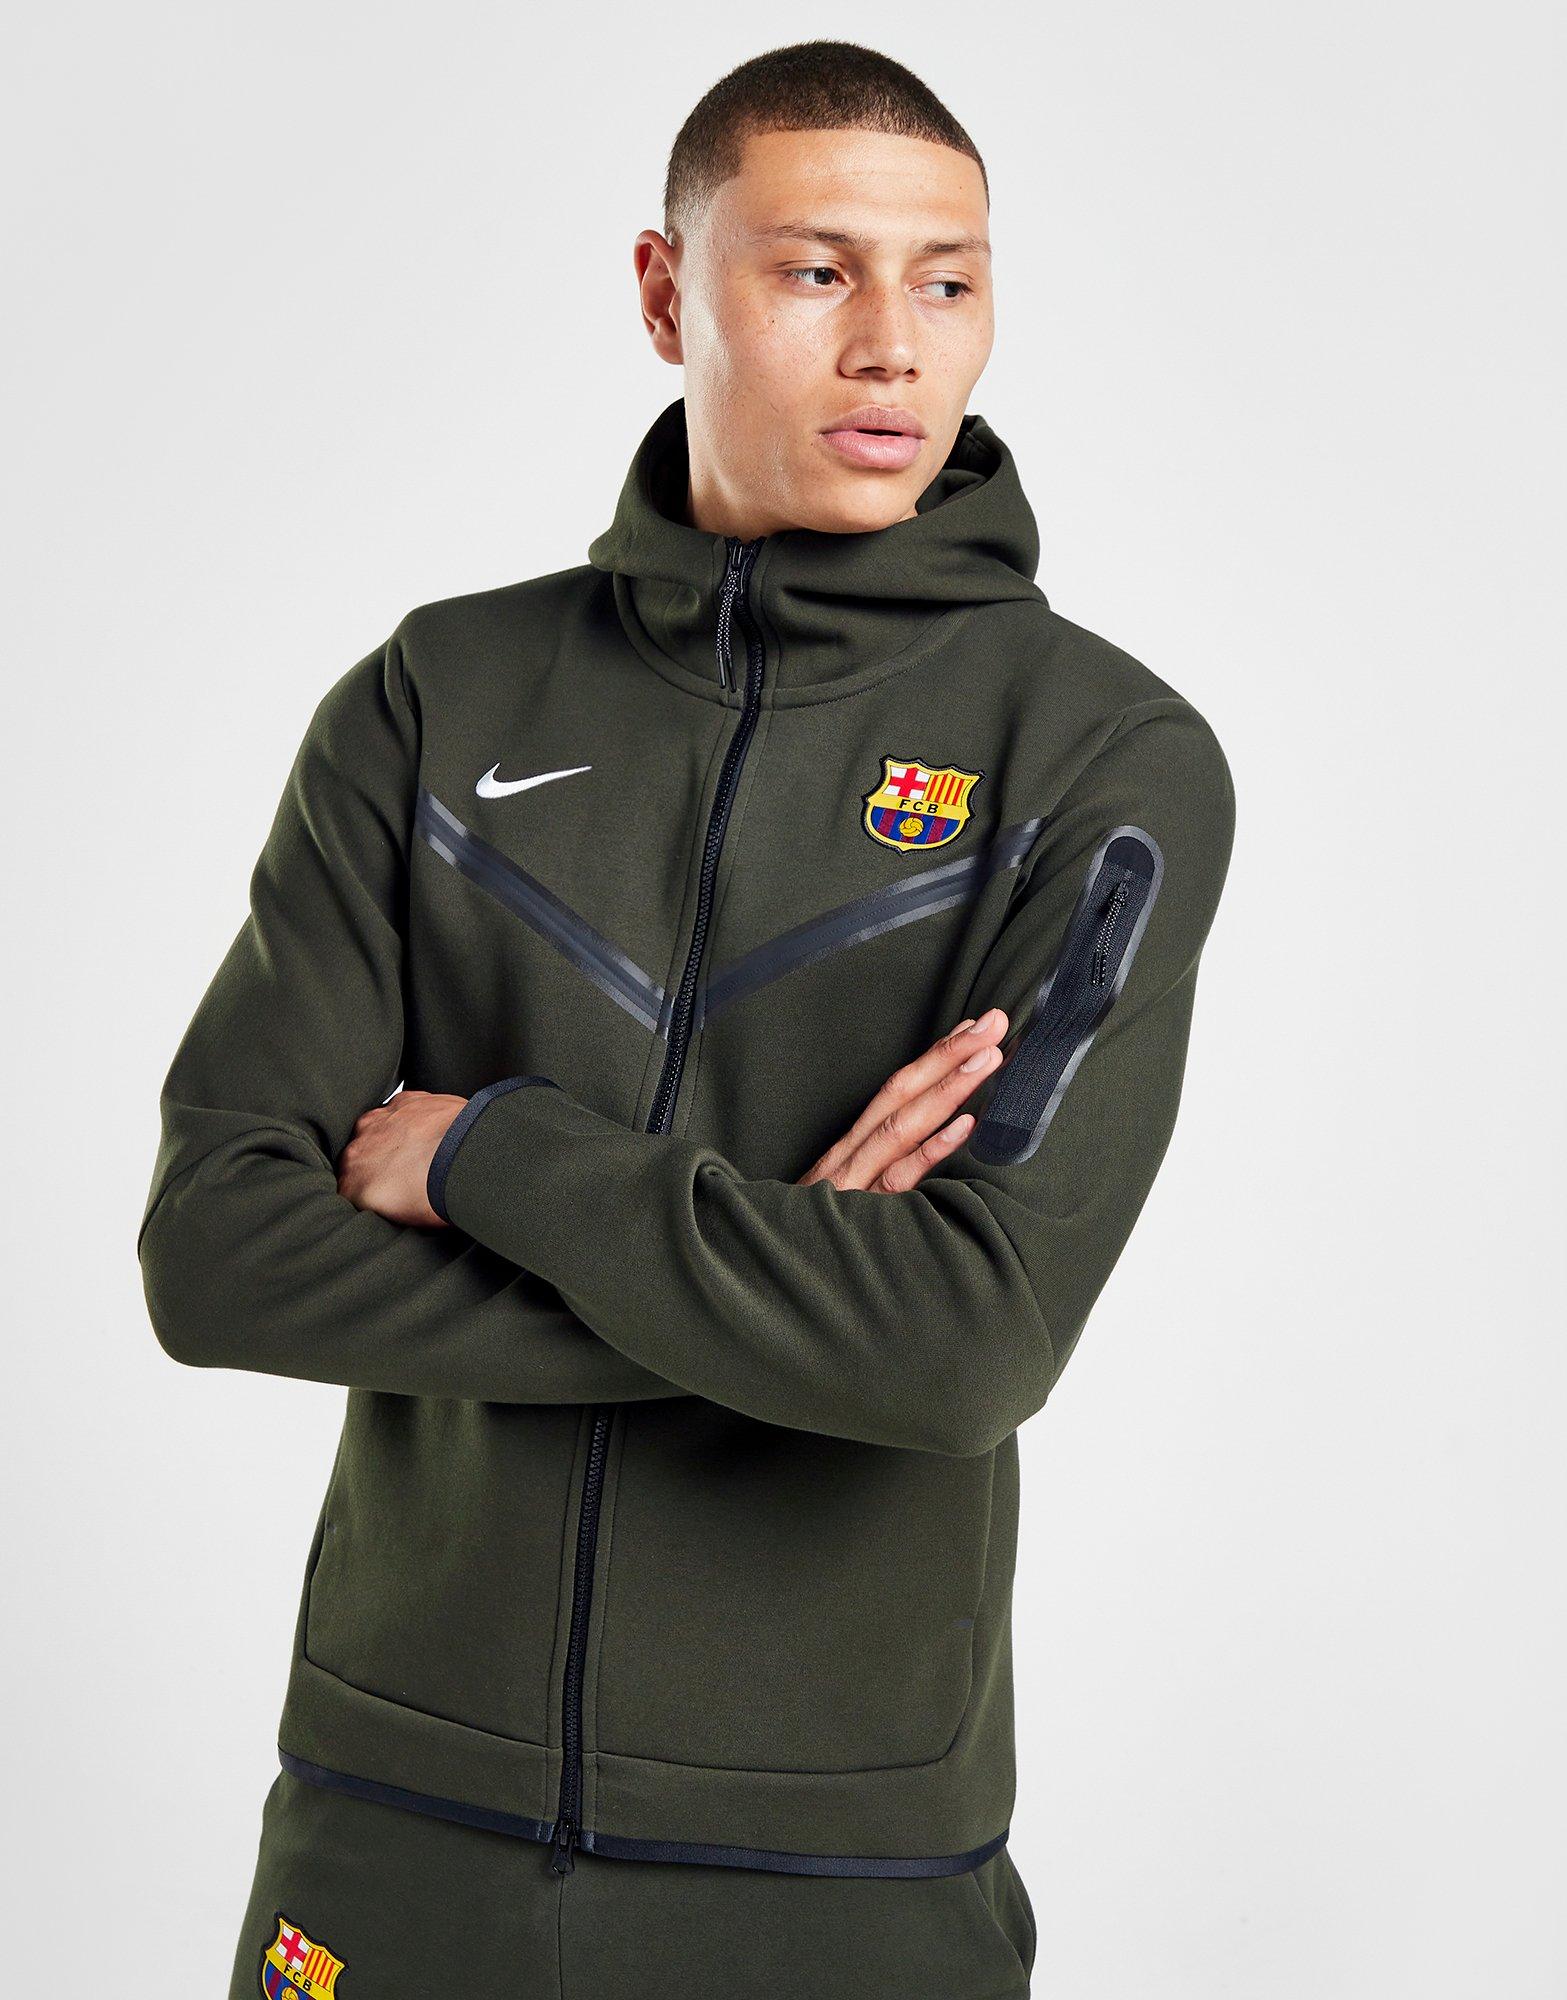 Nike sudadera con capucha FC Barcelona Fleece en Verde JD Sports España